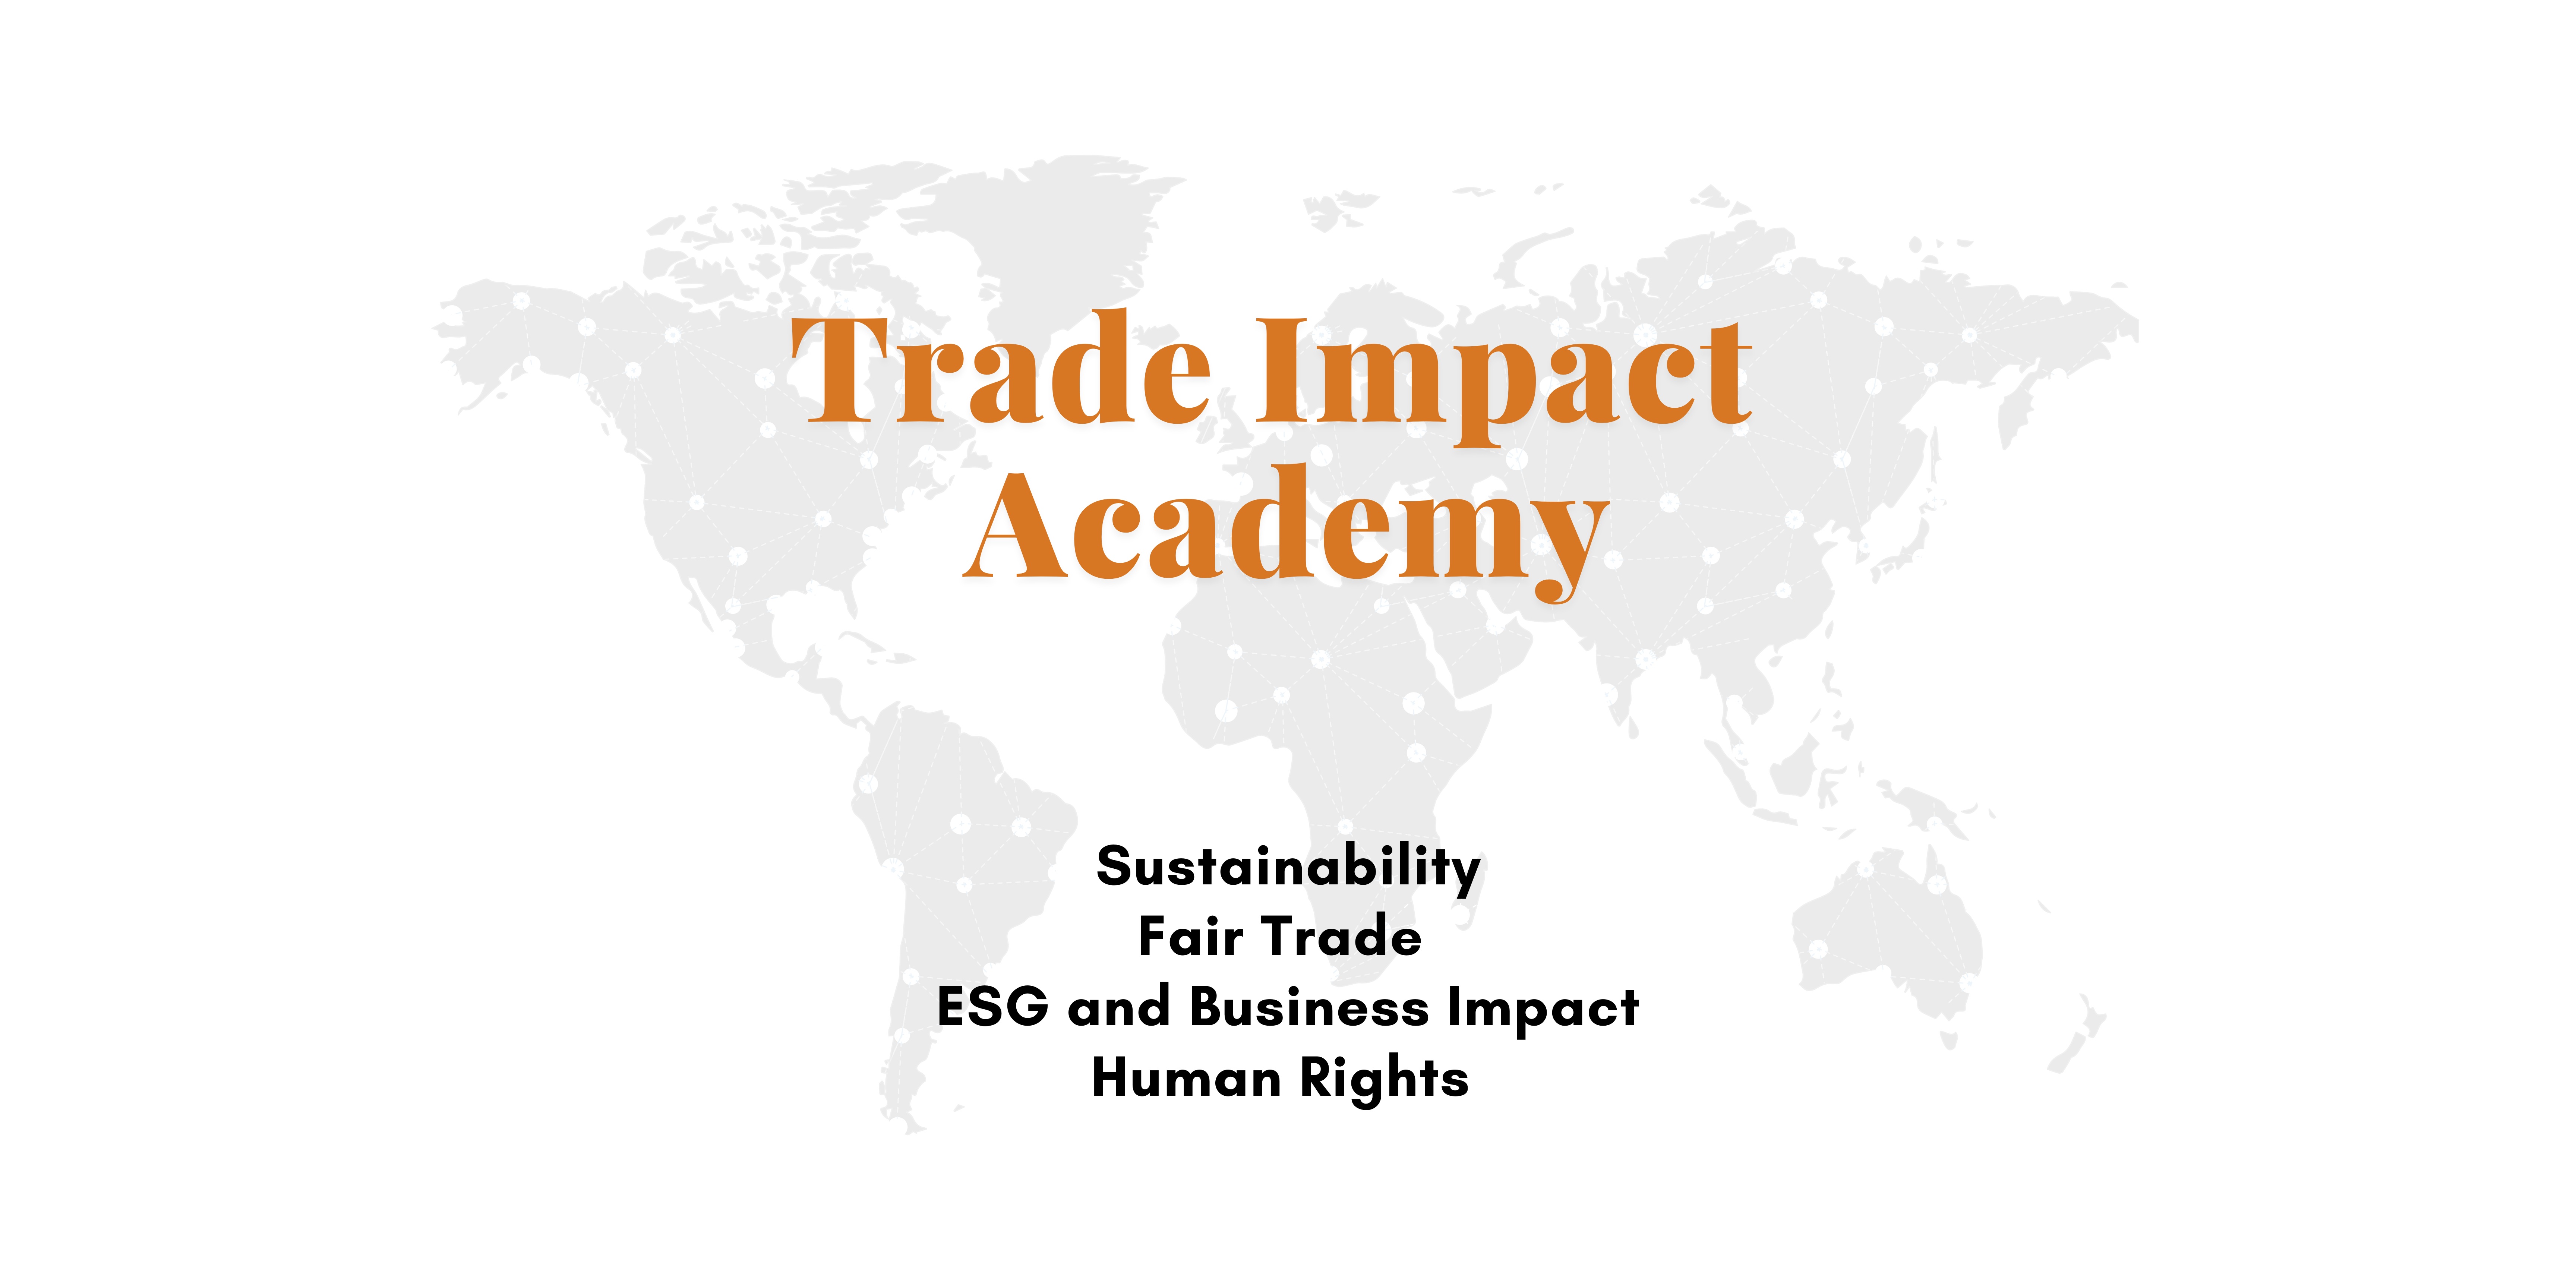 Trade Impact Academy